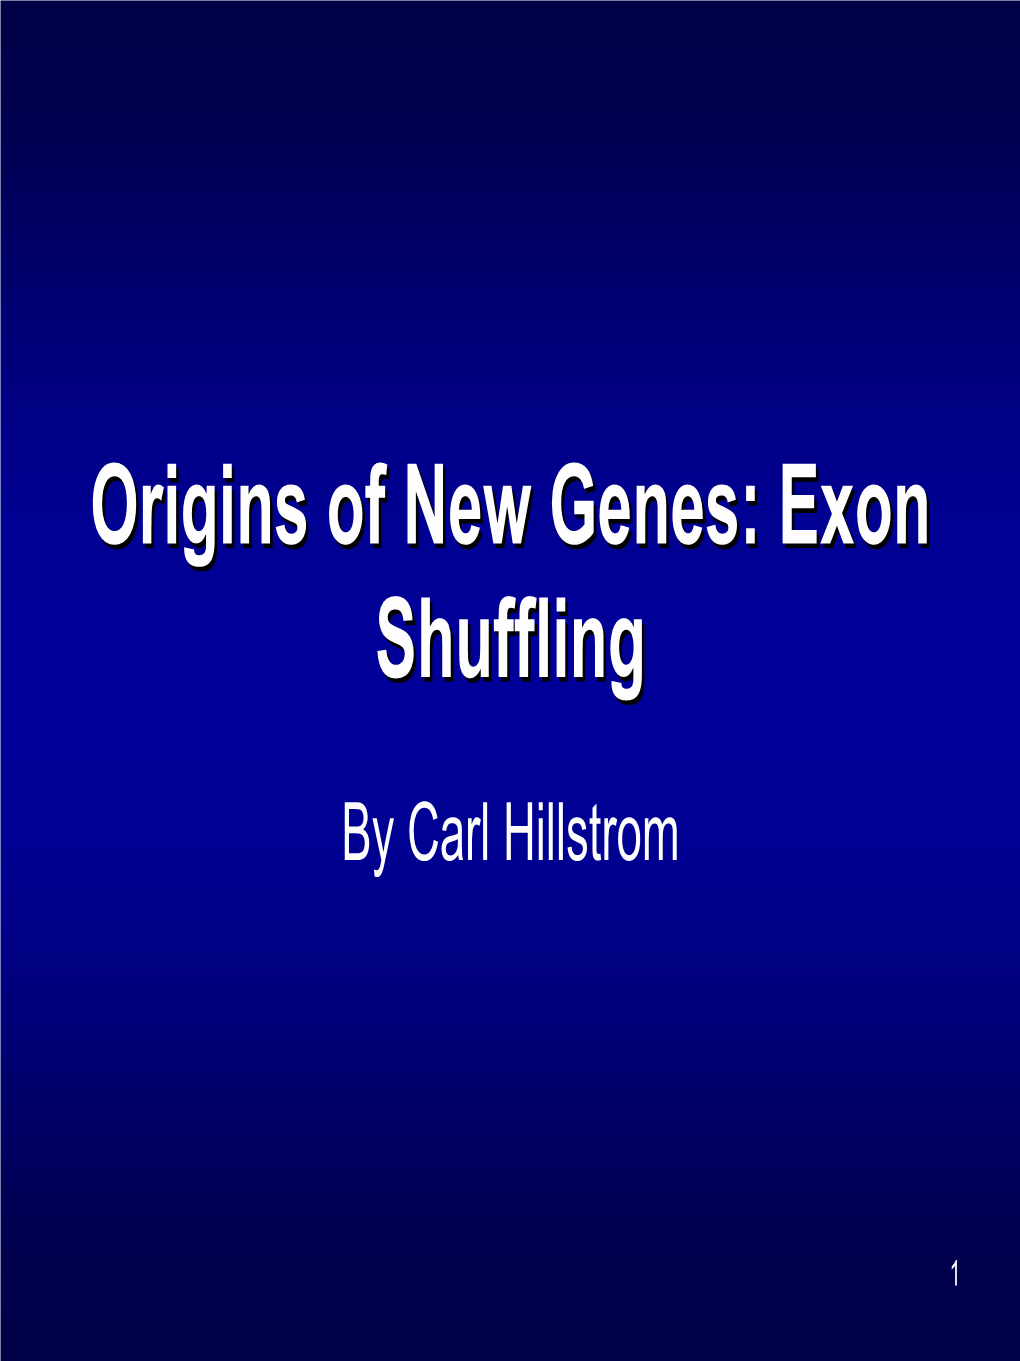 Origins of New Genes: Exon Shuffling